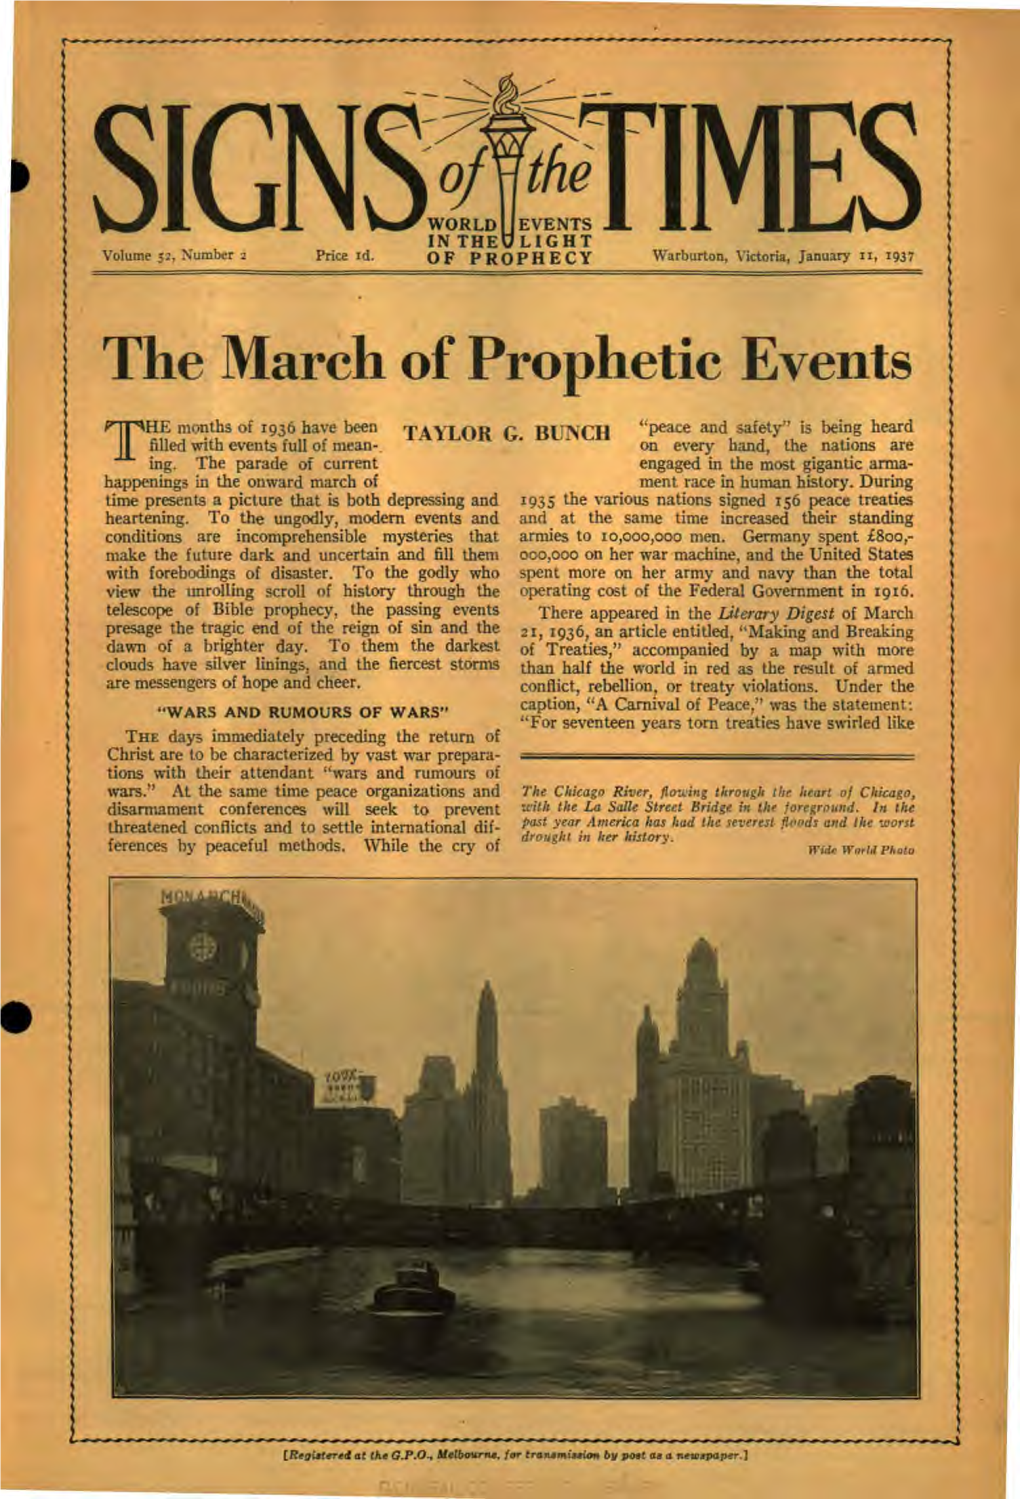 OF PROPHECY Warburton, Victoria, January II, 1937